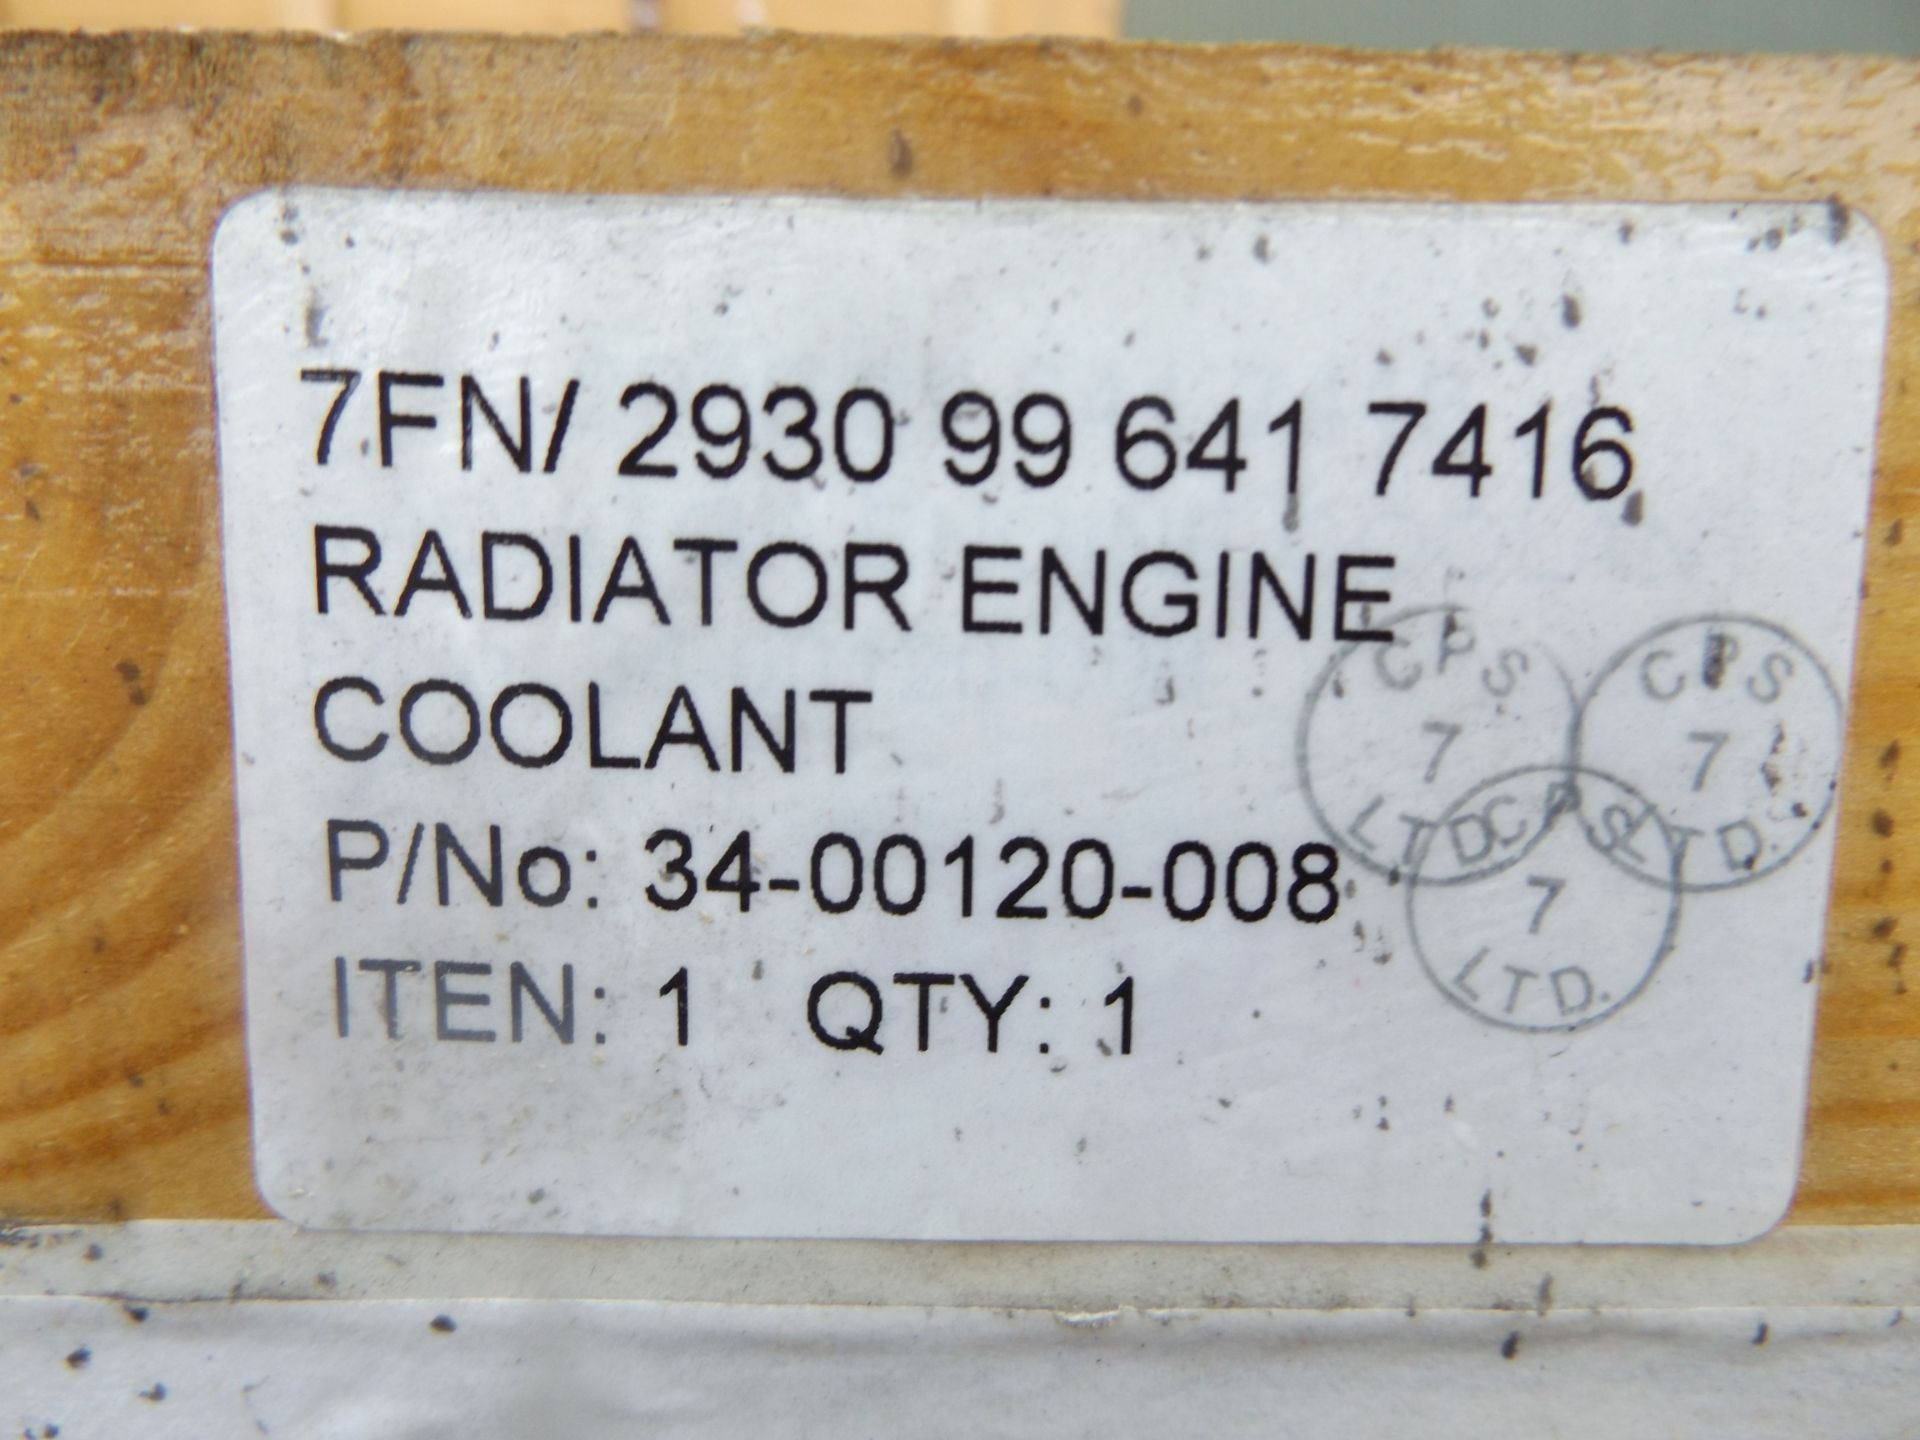 3 x Foden Radiators P/No 34-00120-008 - Image 3 of 3